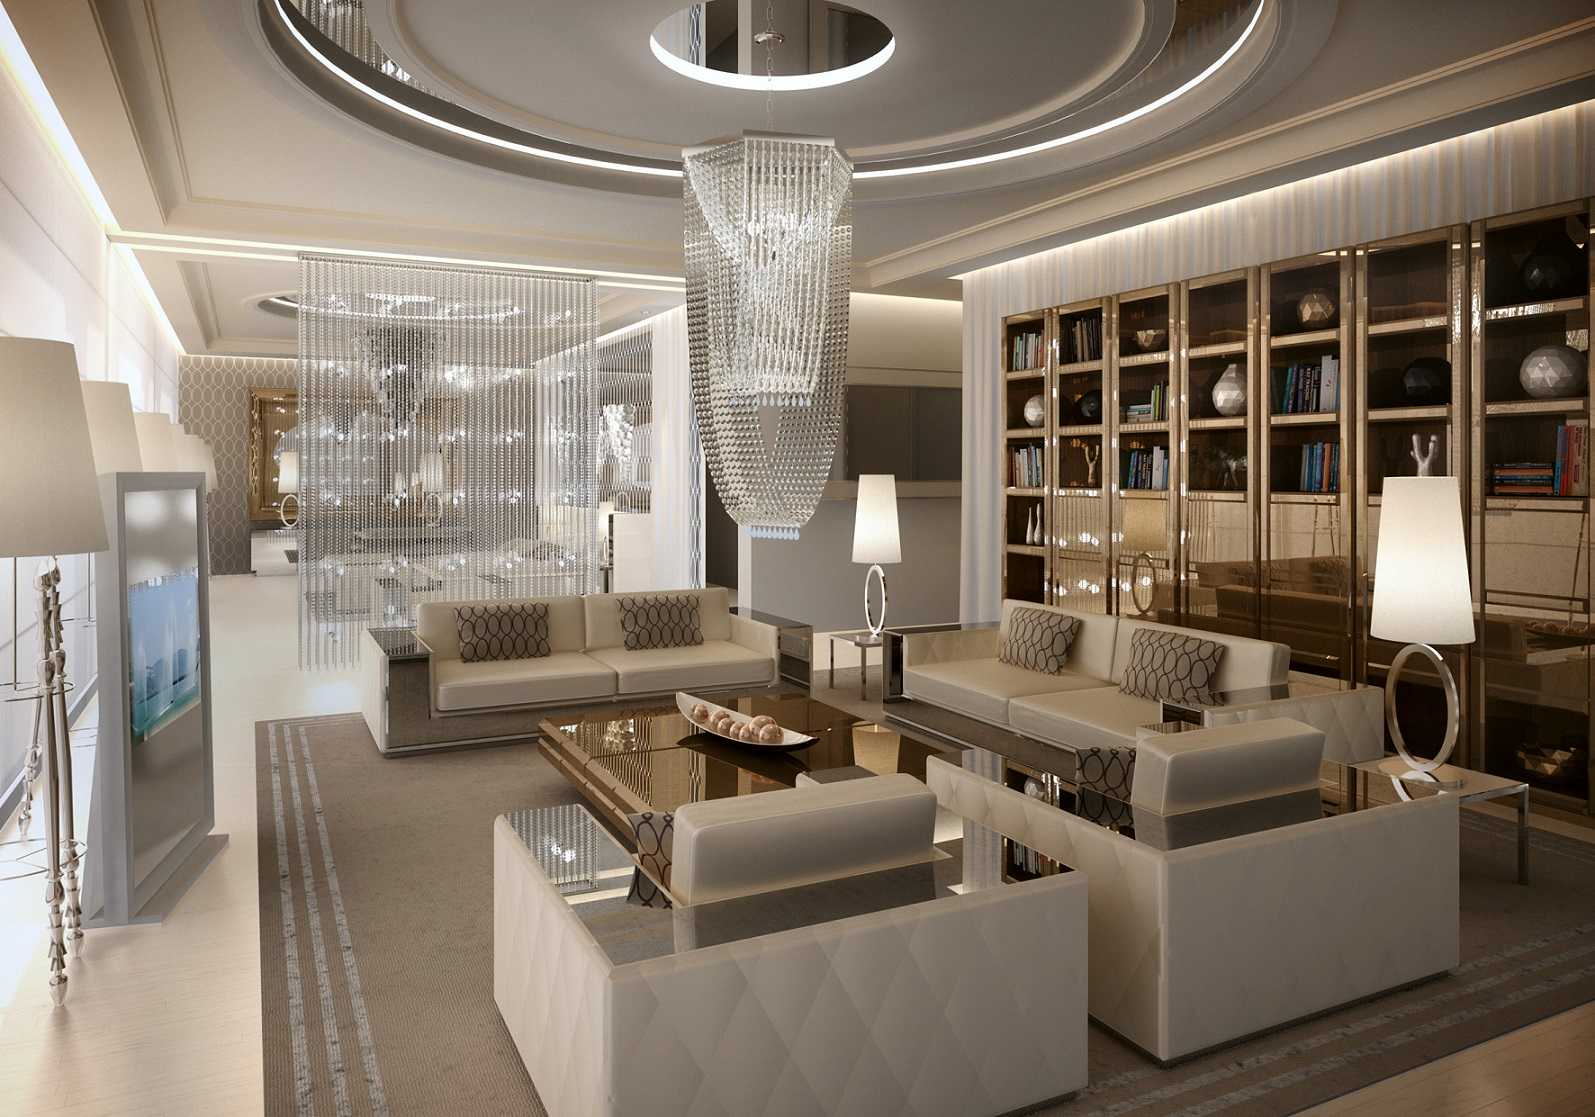 luxury interior design for living room